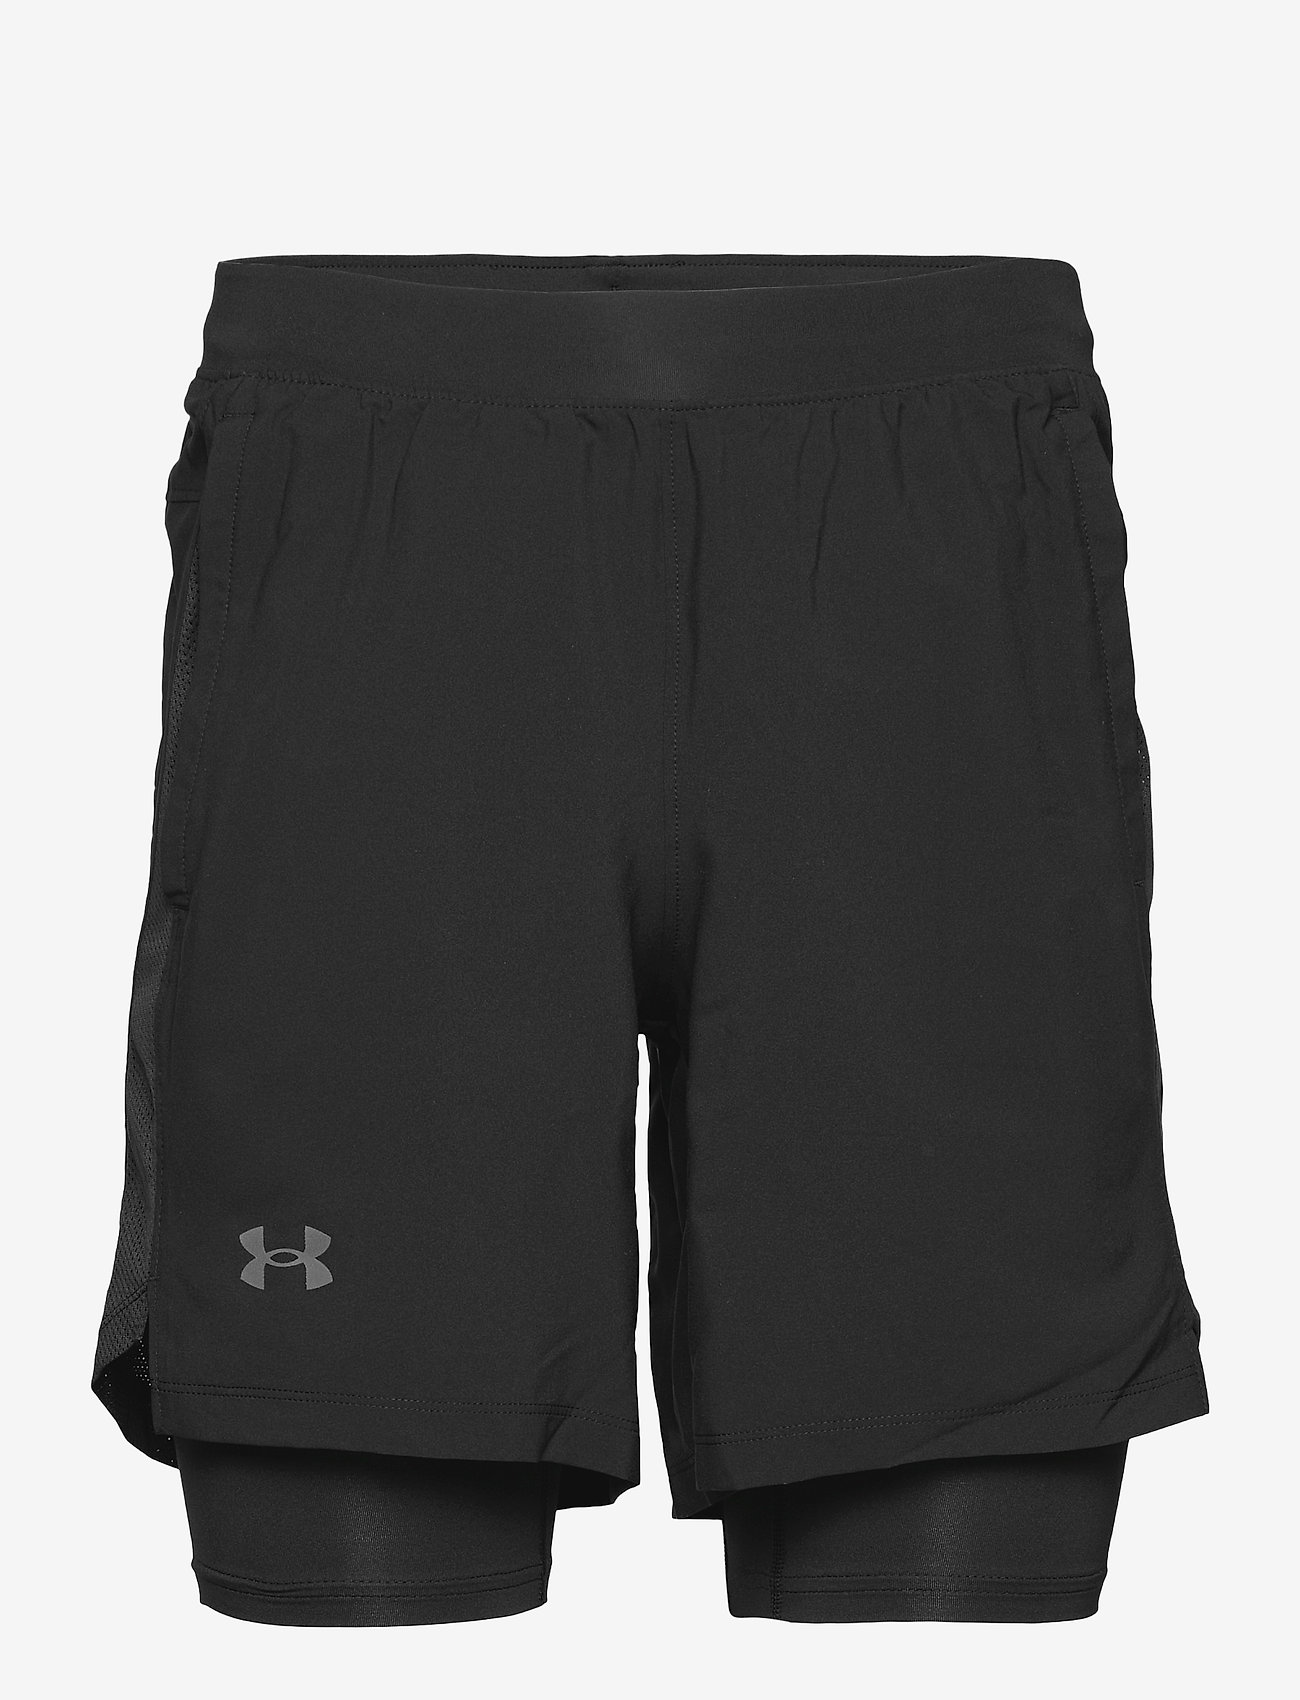 Under Armour - UA LAUNCH 7'' 2-IN-1 SHORT - training shorts - black - 0